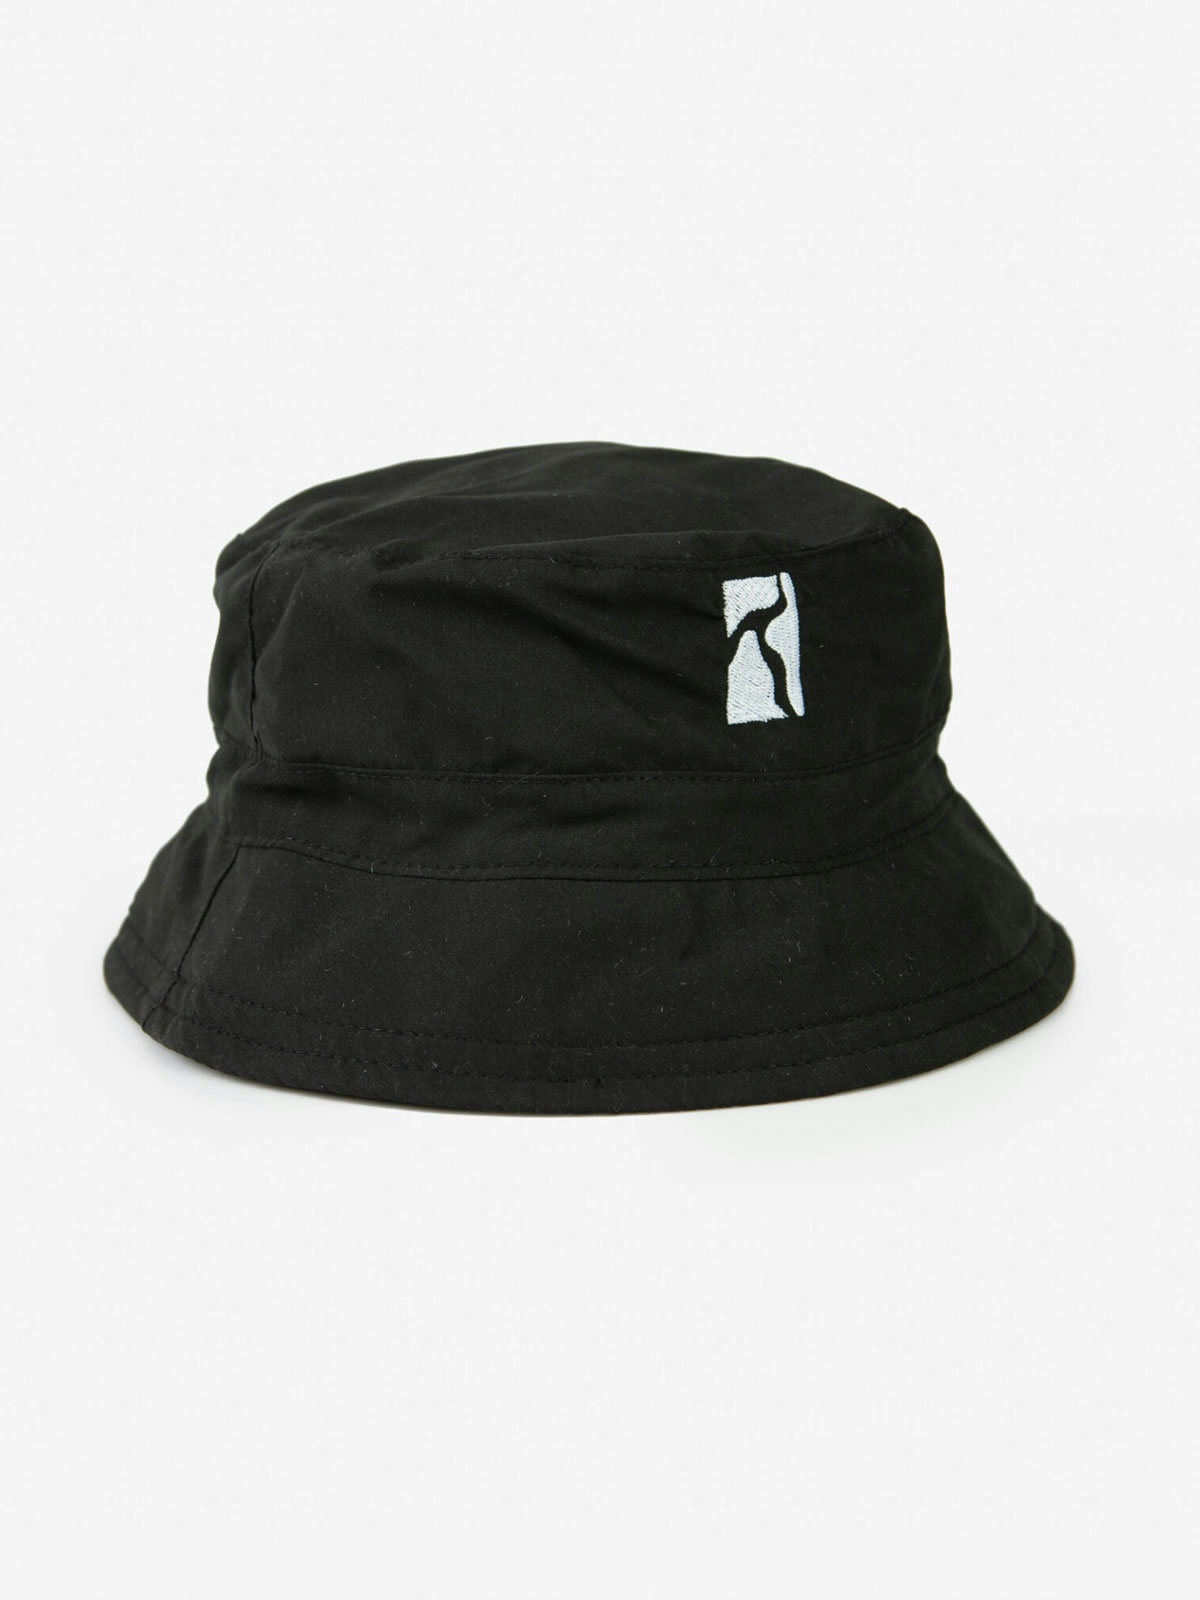 Poetic Collective Bucket Hat Black/White 2